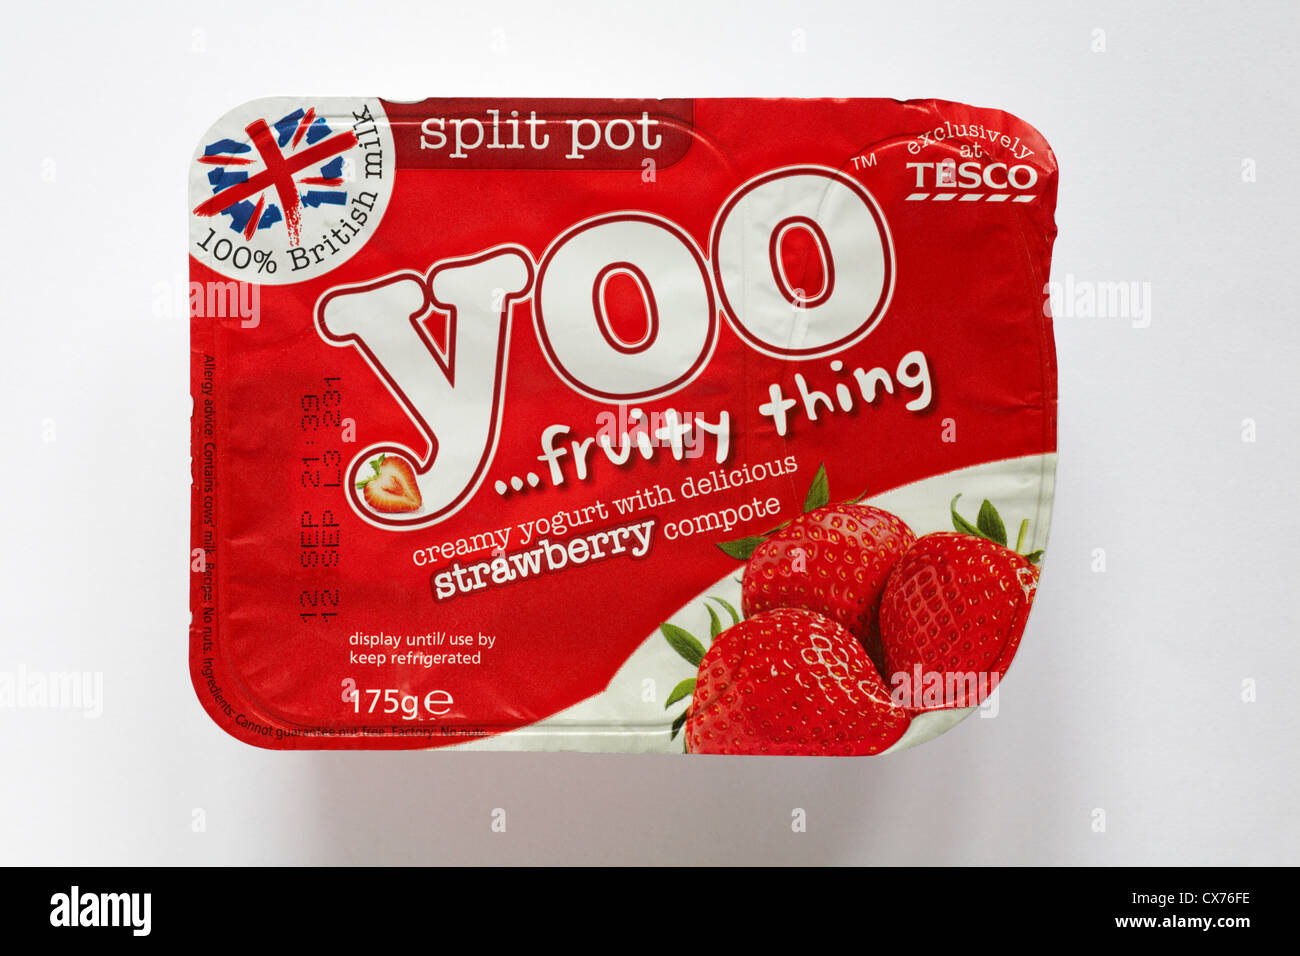 https://c8.alamy.com/comp/CX76FE/split-pot-of-yoo-fruity-thing-creamy-yogurt-with-delicious-strawberry-CX76FE.jpg